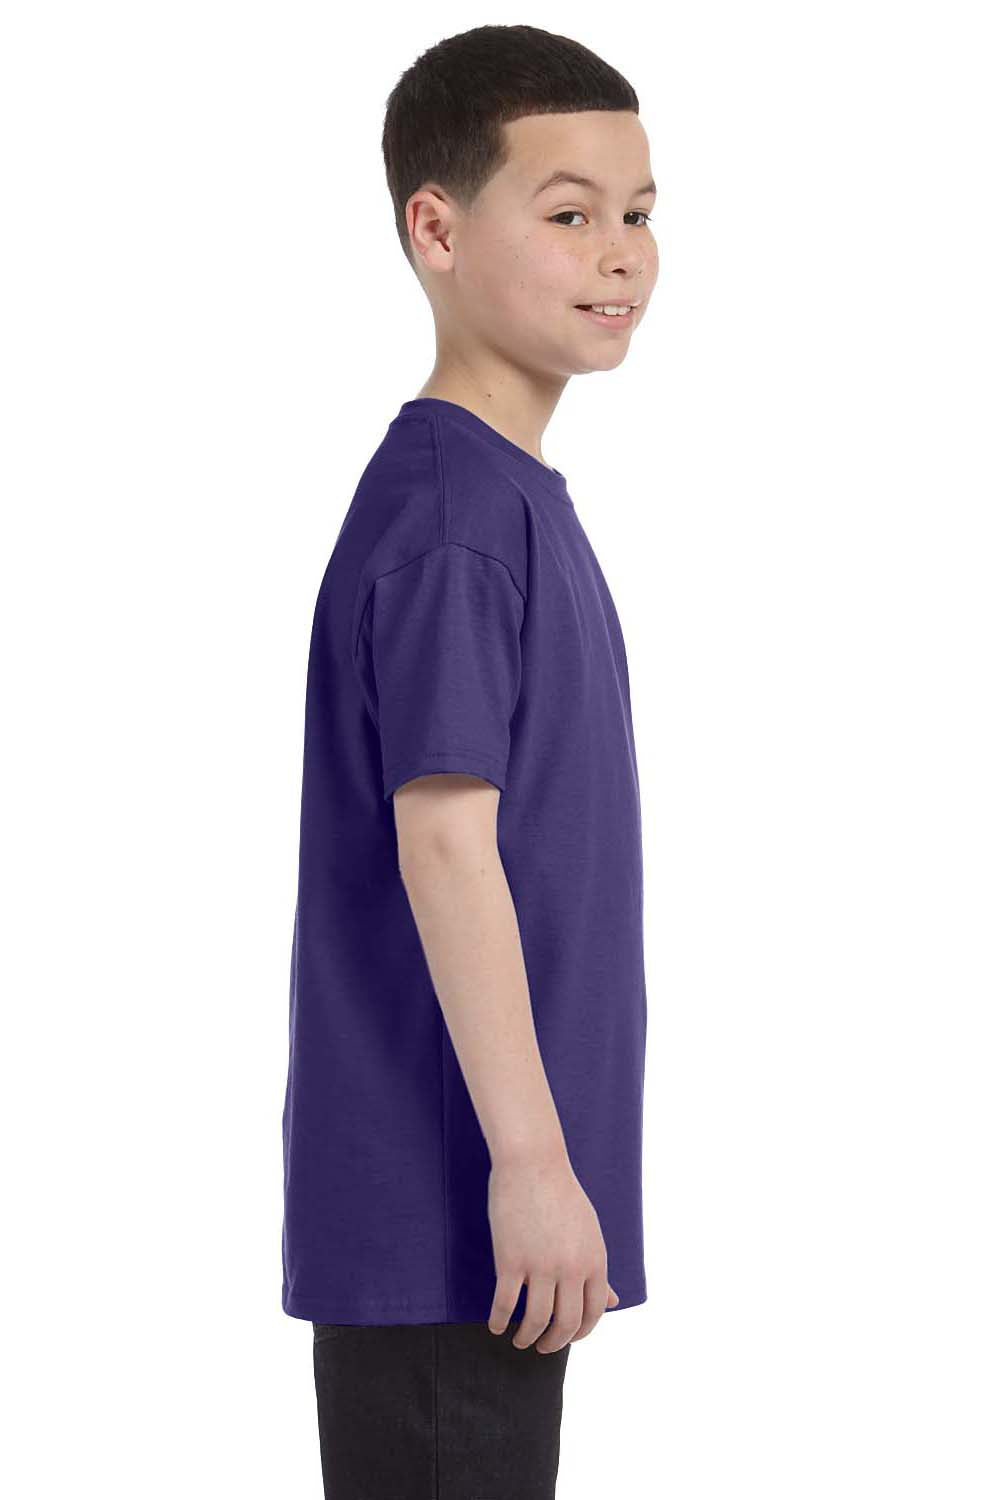 Jerzees 29B Youth Dri-Power Moisture Wicking Short Sleeve Crewneck T-Shirt Purple Side